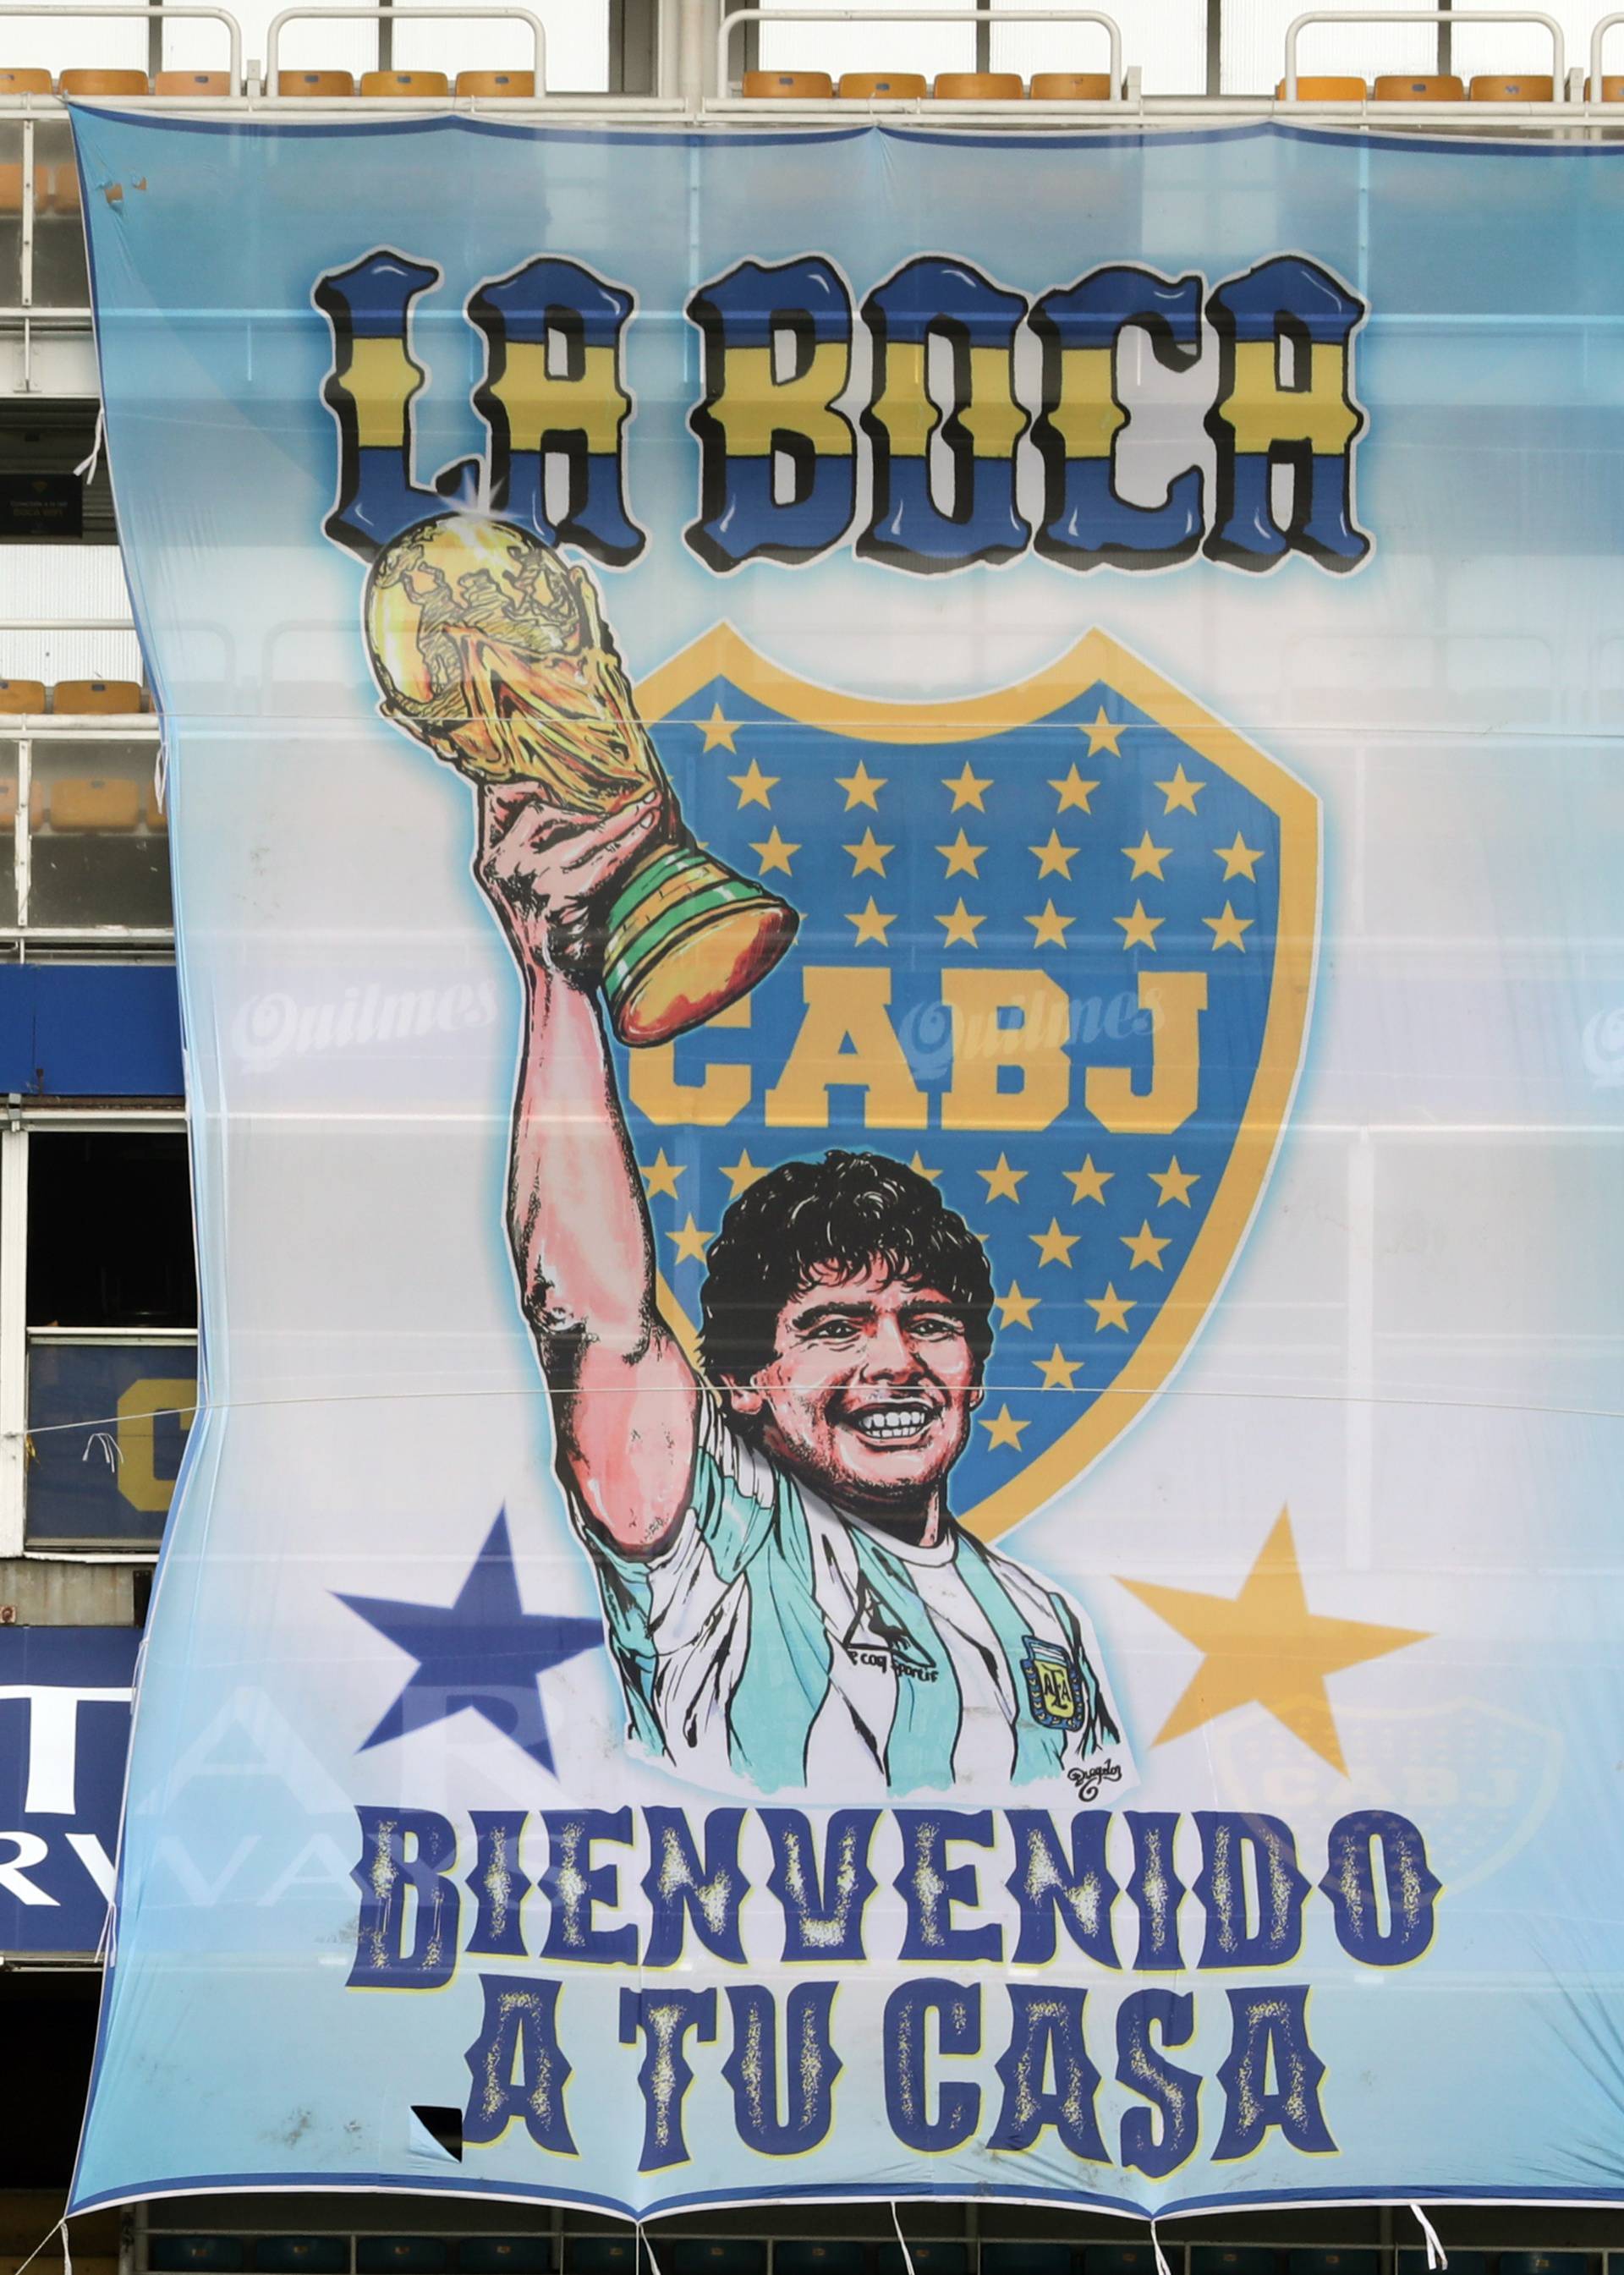 Copa Diego Maradona - Boca Juniors v Newell's Old Boys